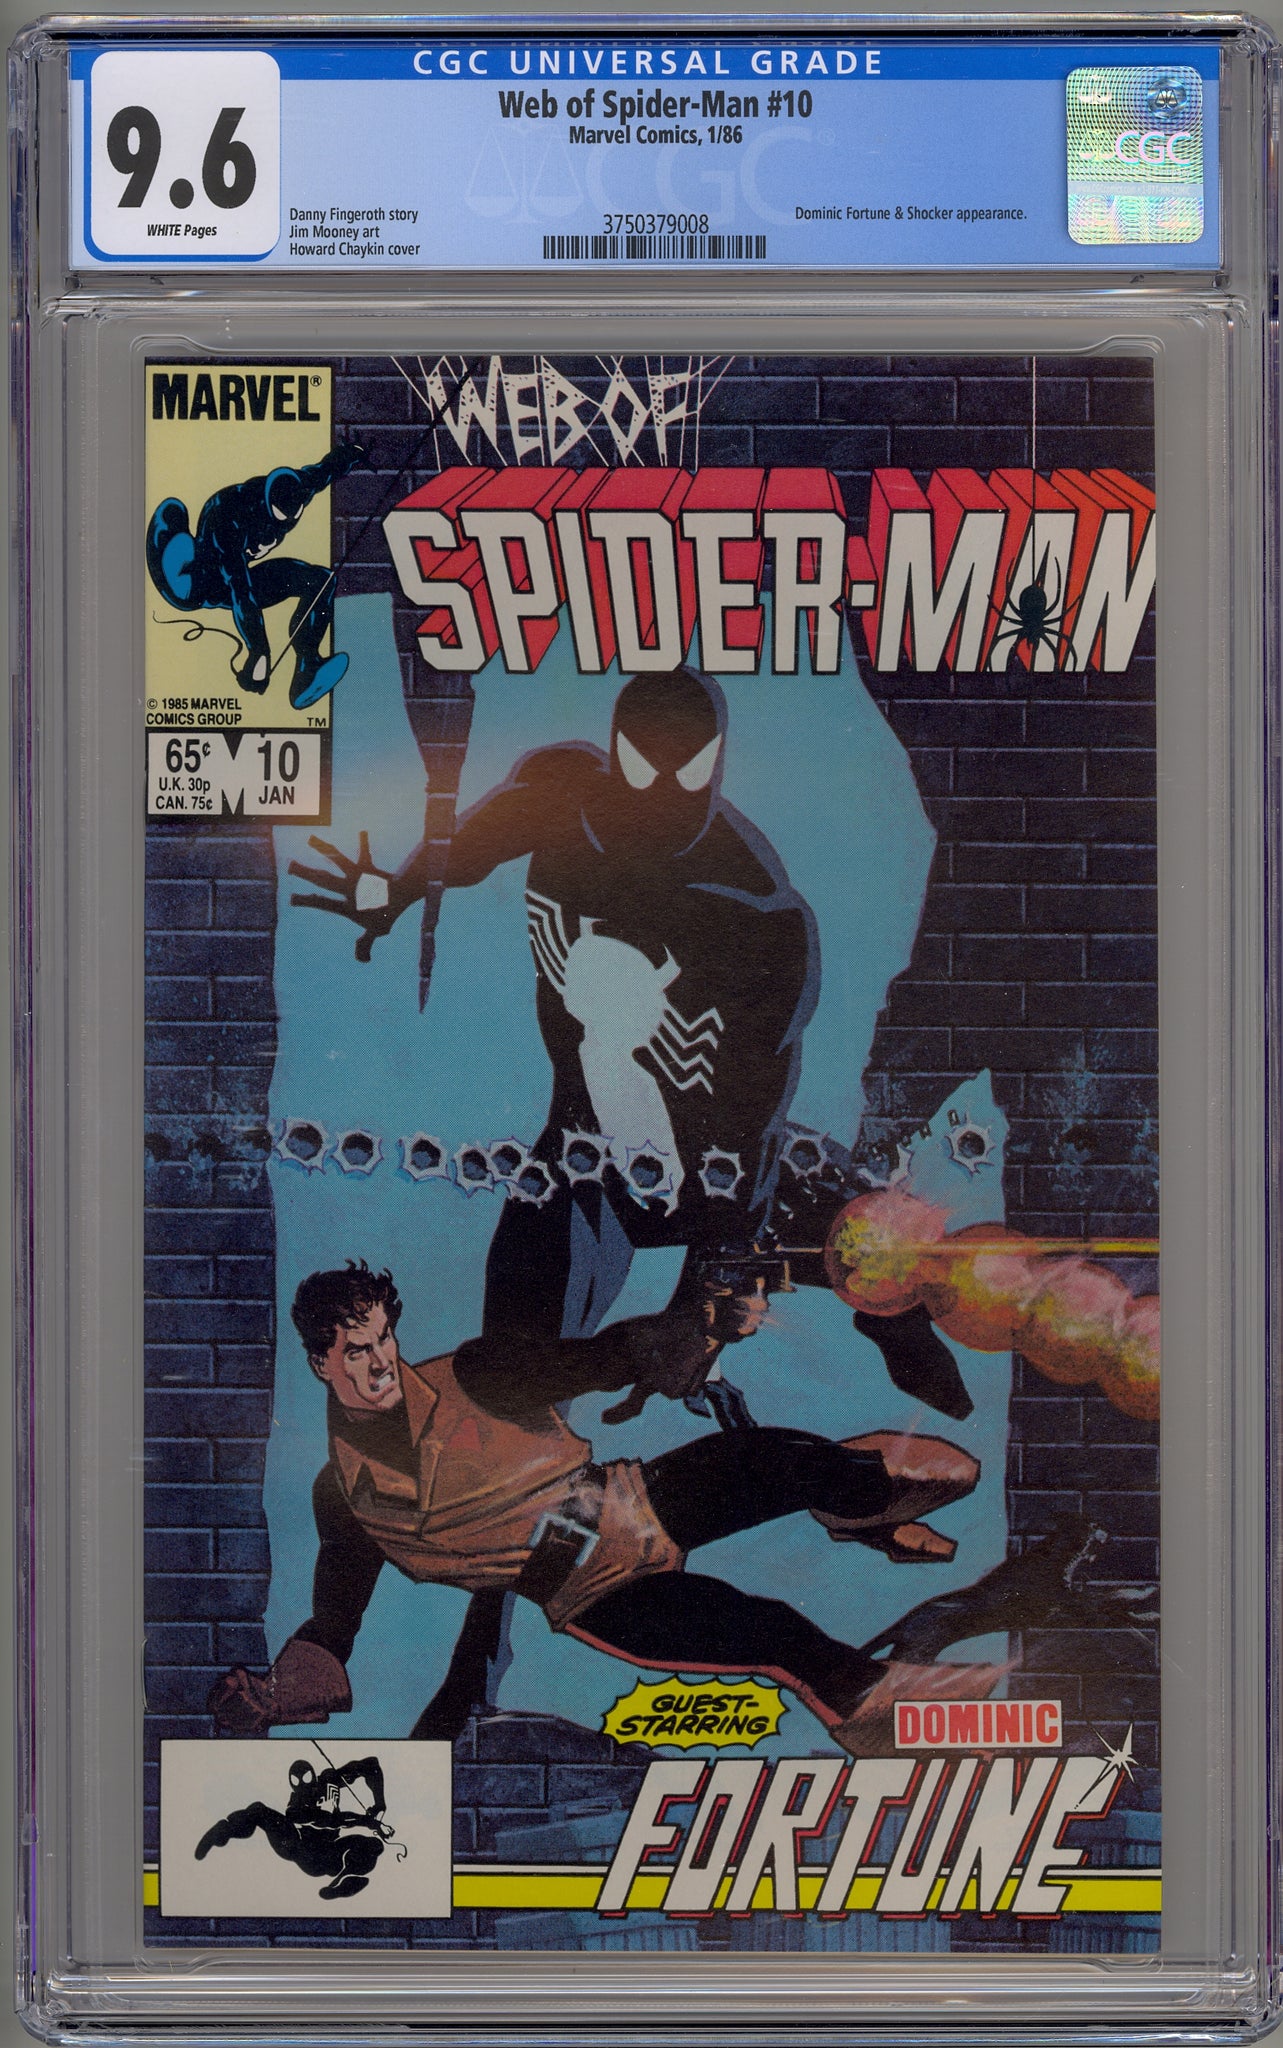 Web of Spider-Man #10 (1986) Dominic Fortune, Shocker